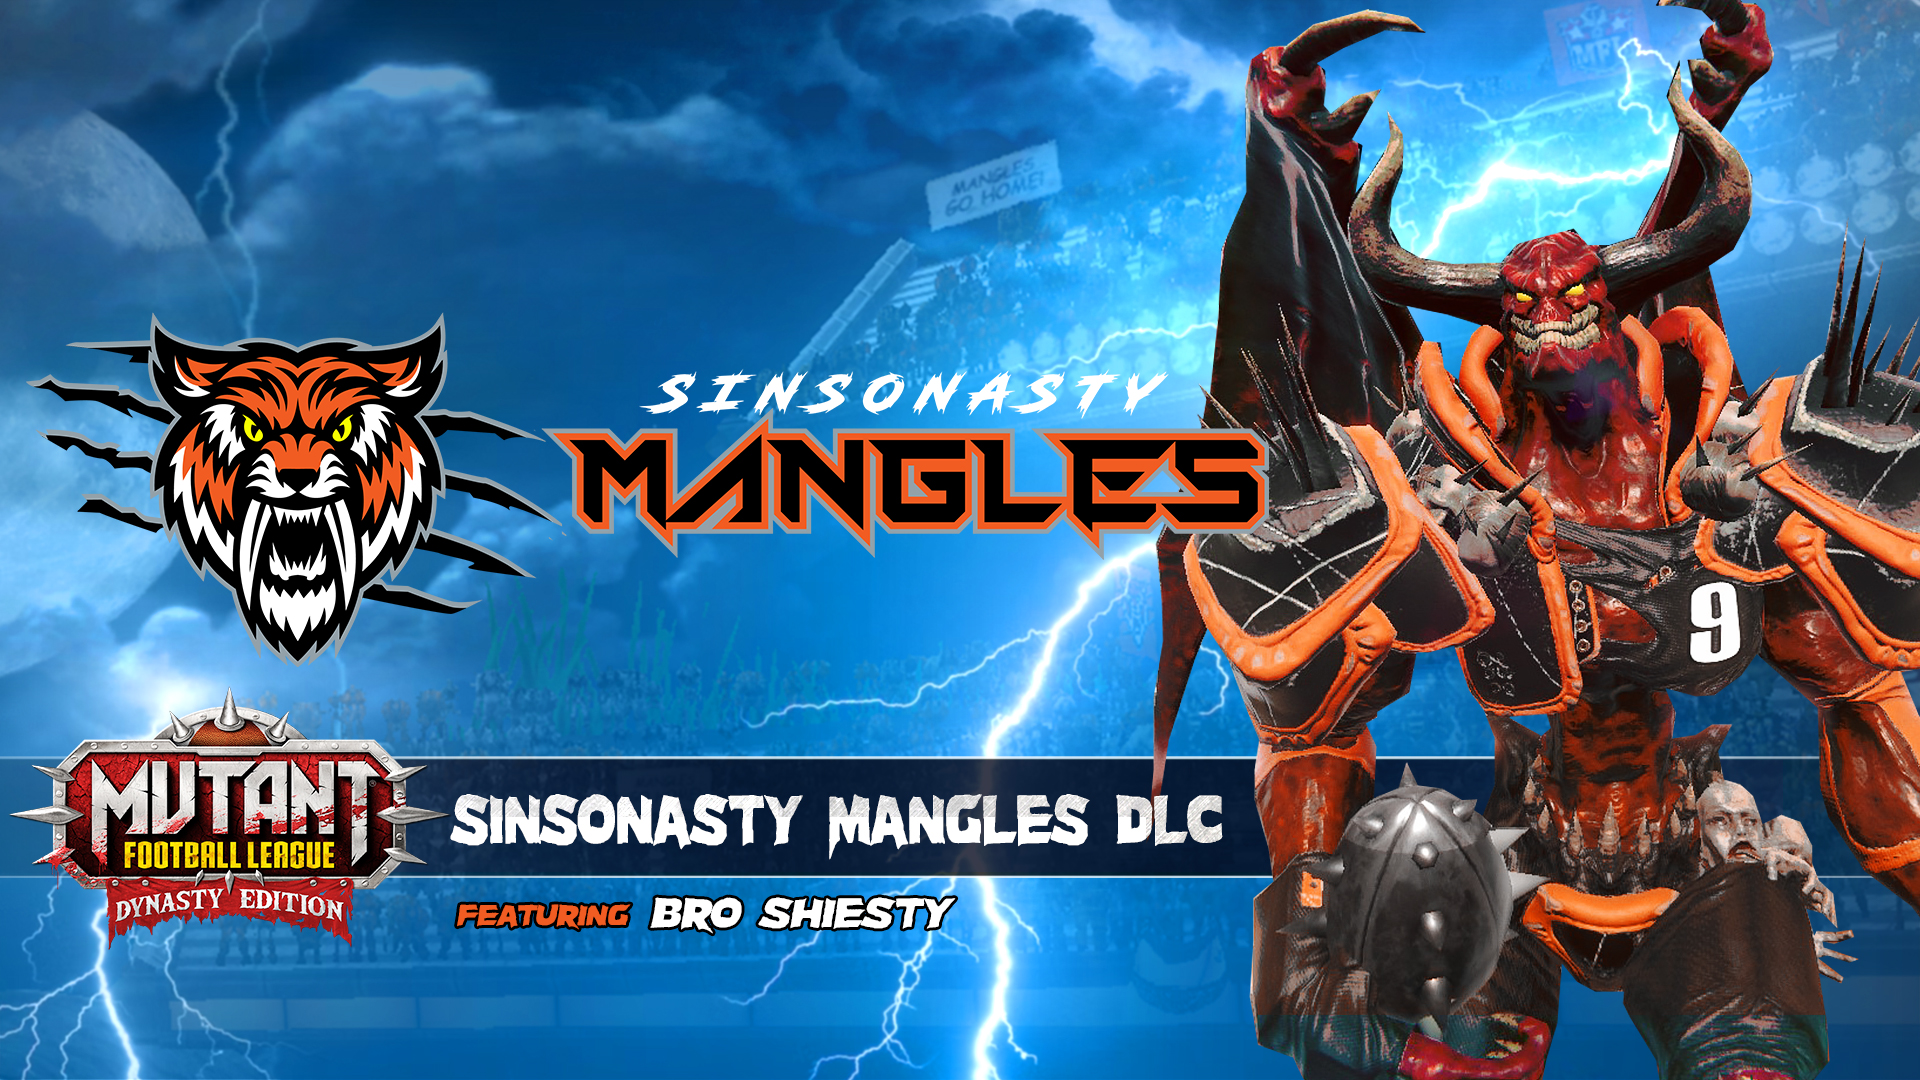 Sinsonasty Mangles